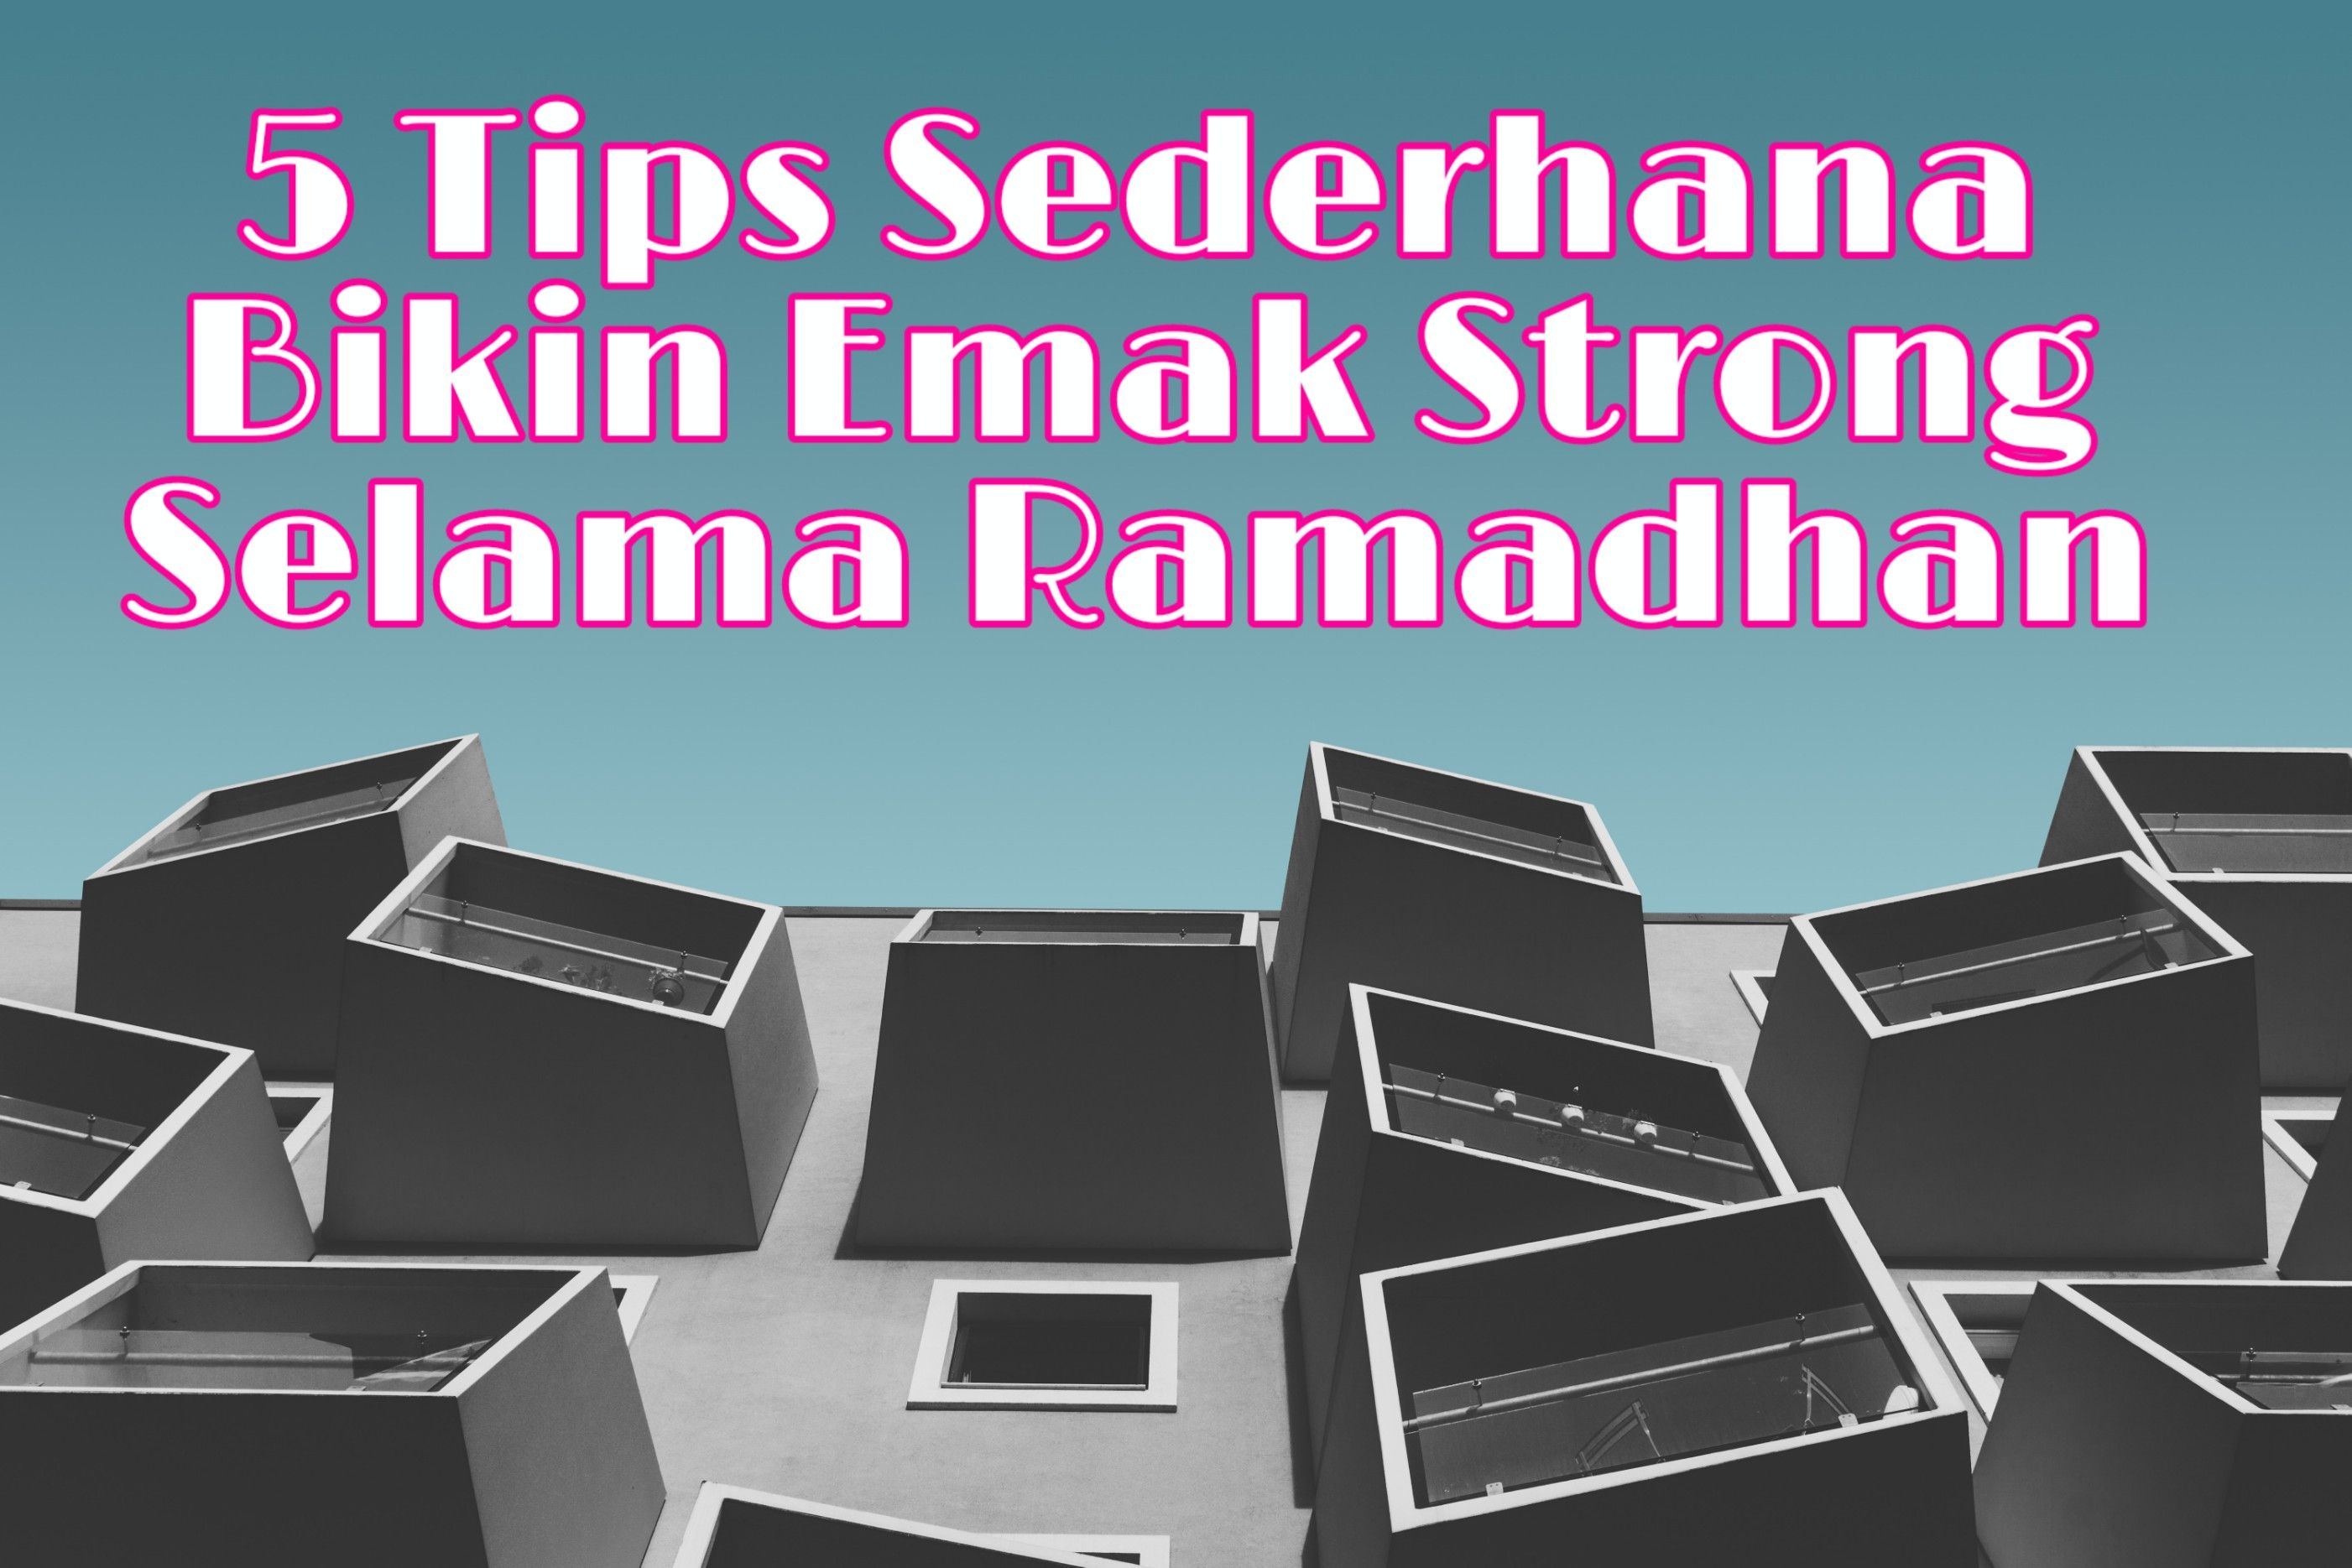 5 Tips Sederhana Tetap "Strong" Selama Ramadhan ala Working Mommy